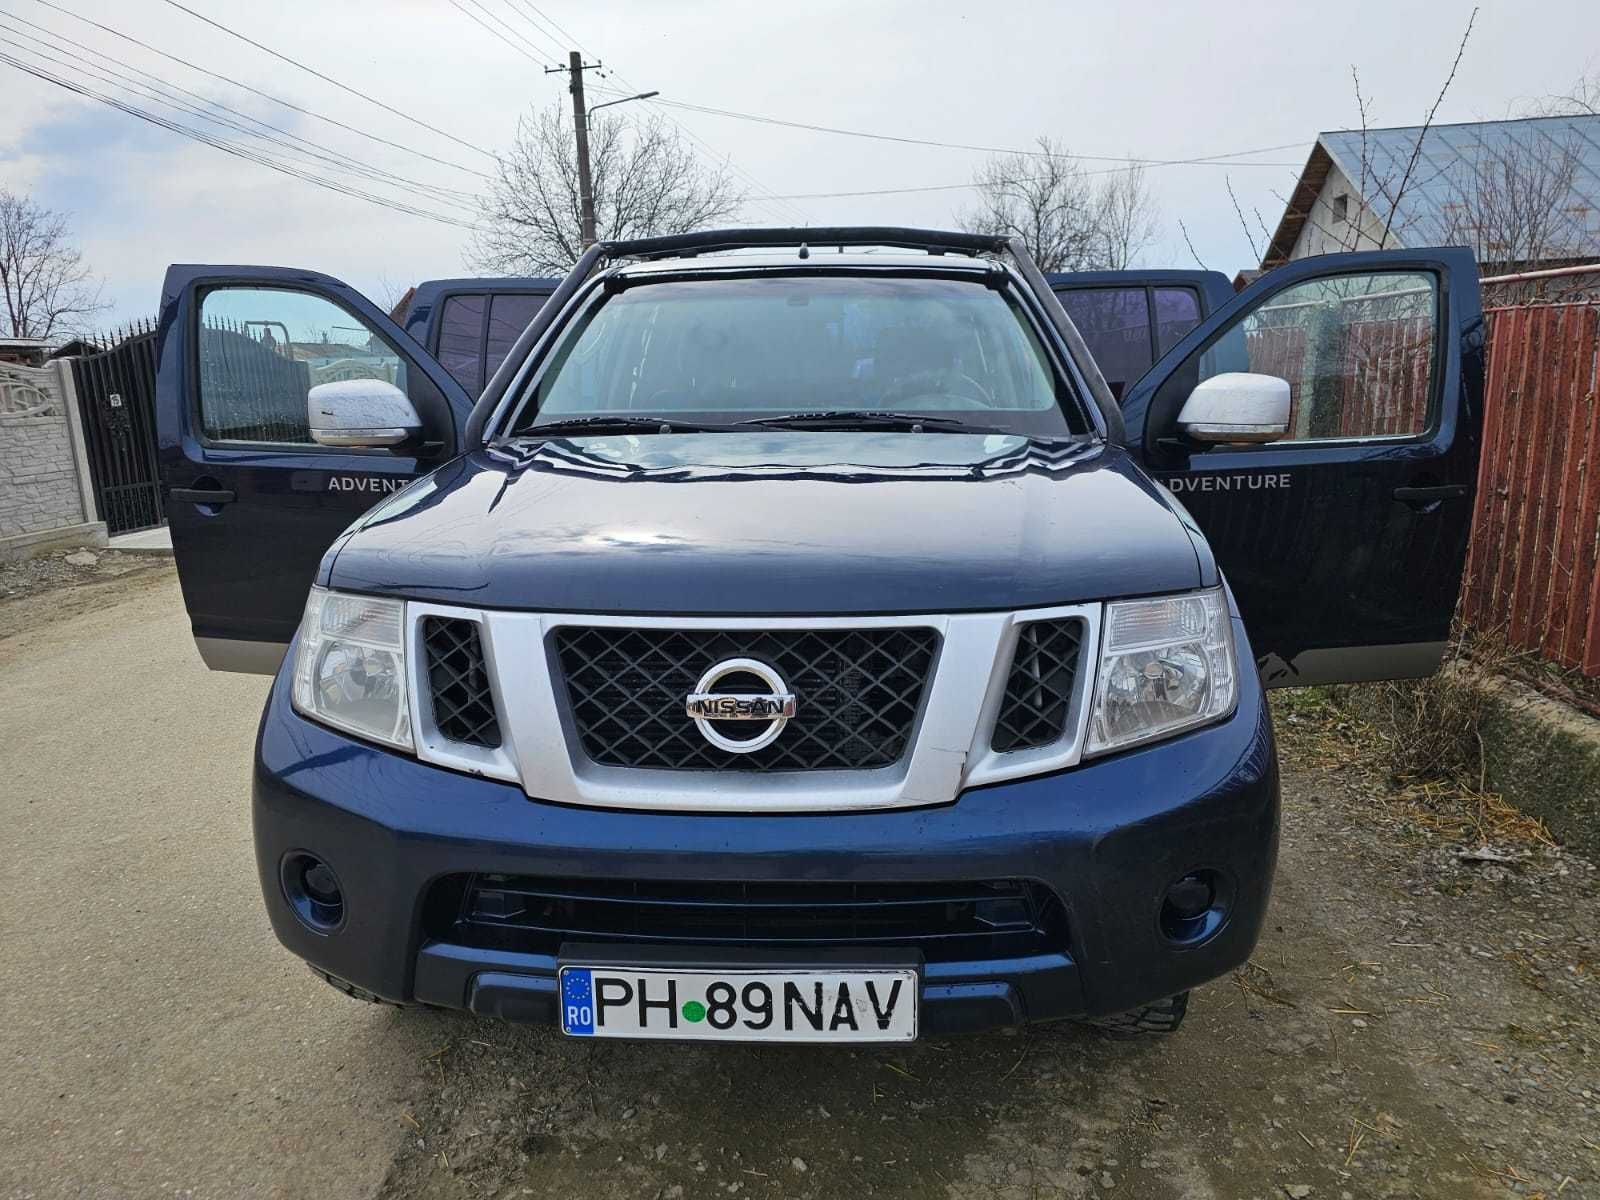 Nissan Navara D40, 2013, 2.5, 190 hp autoutilitara pick-up cu bena